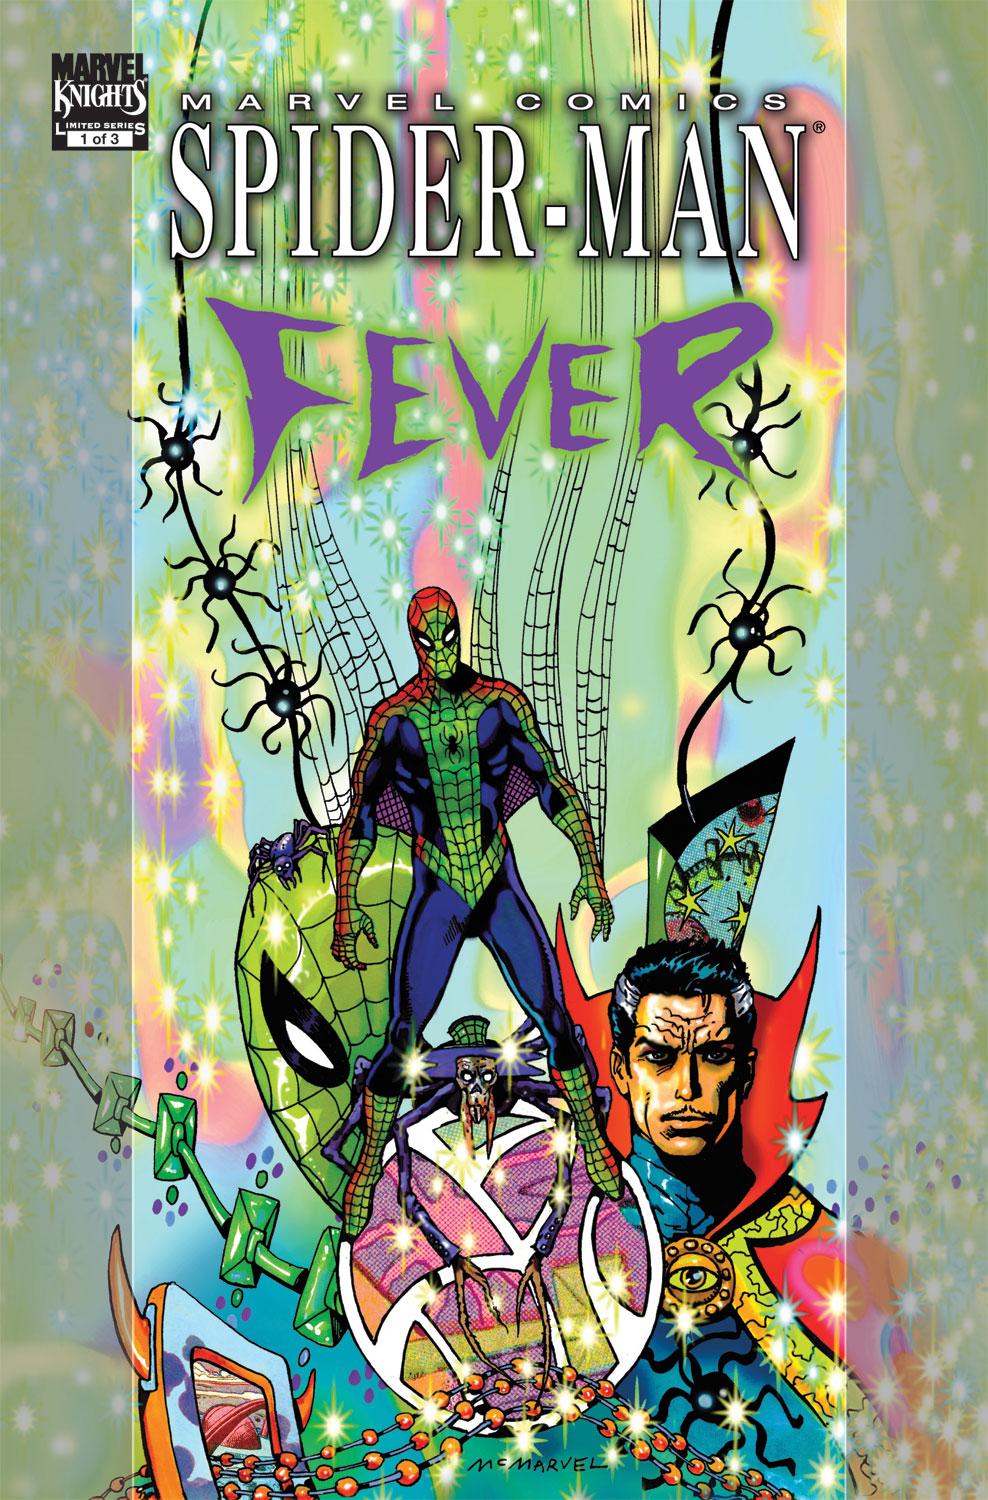 Spider-Man: Fever (2010) #1